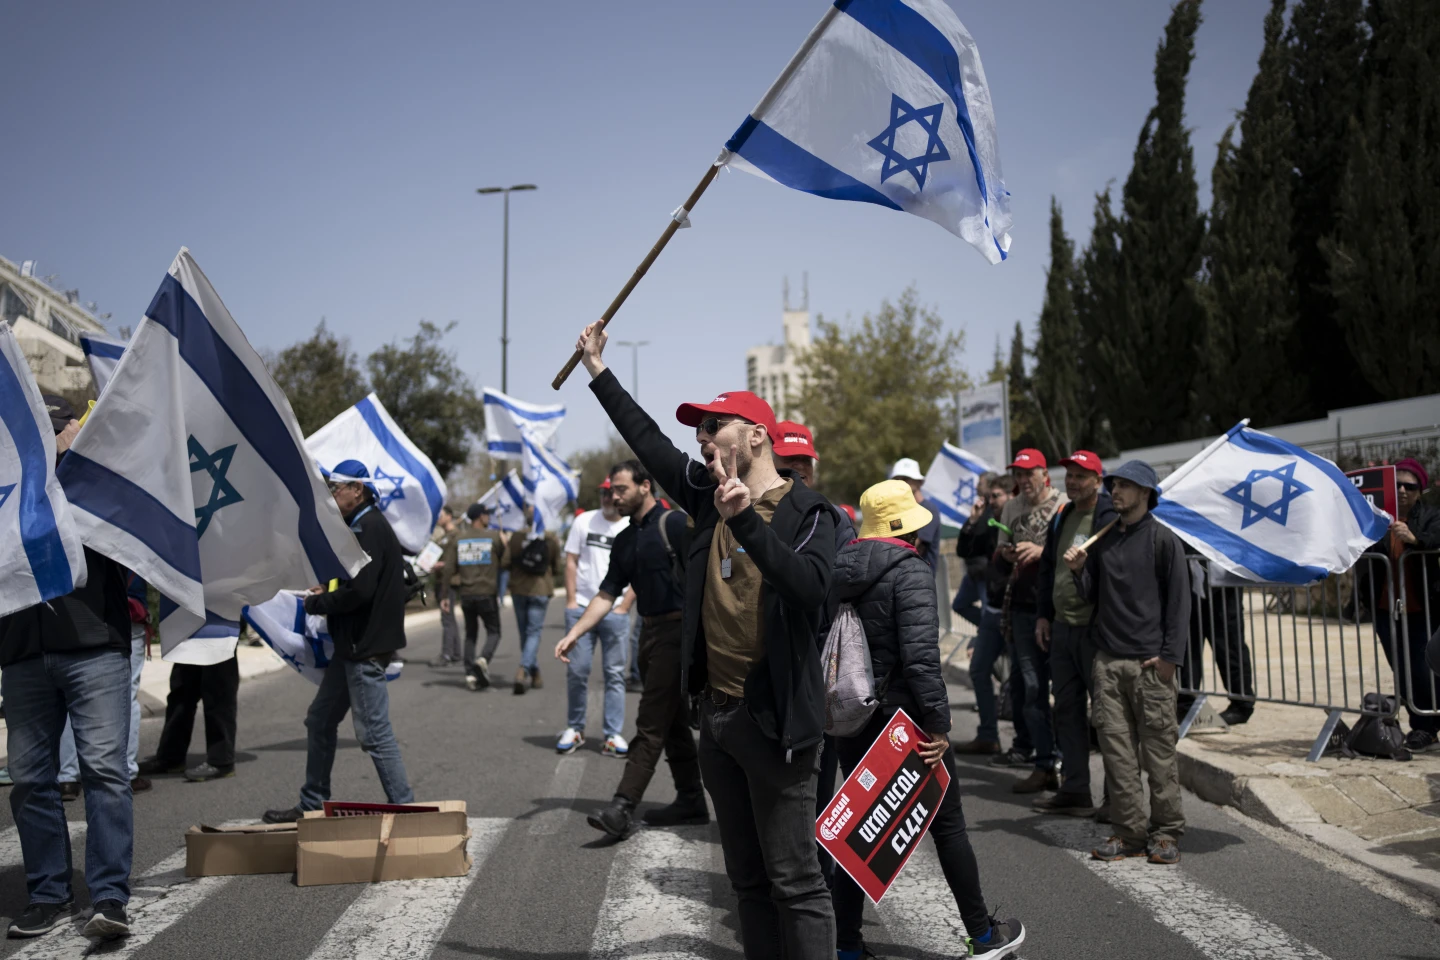 Israeli court halts subsidies for ultra-Orthodox, raises uproar over compulsory military service